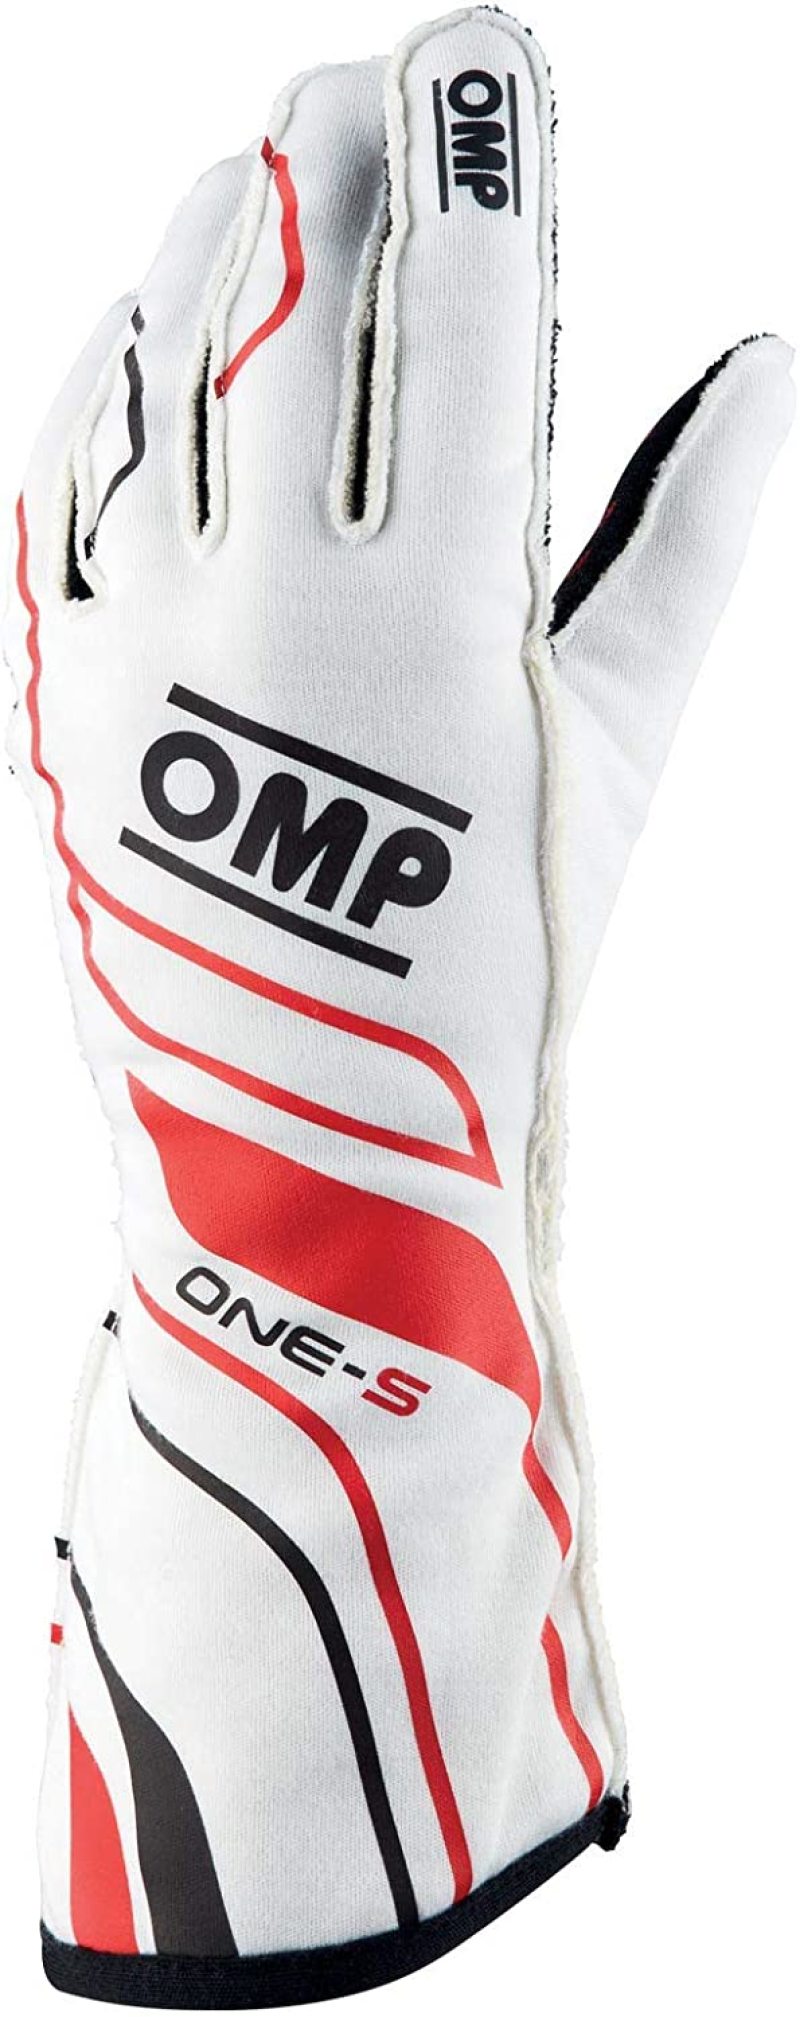 OMP One-S Gloves White - Size XL Fia 8556-2018 - IB0-0770-A01-020-XL